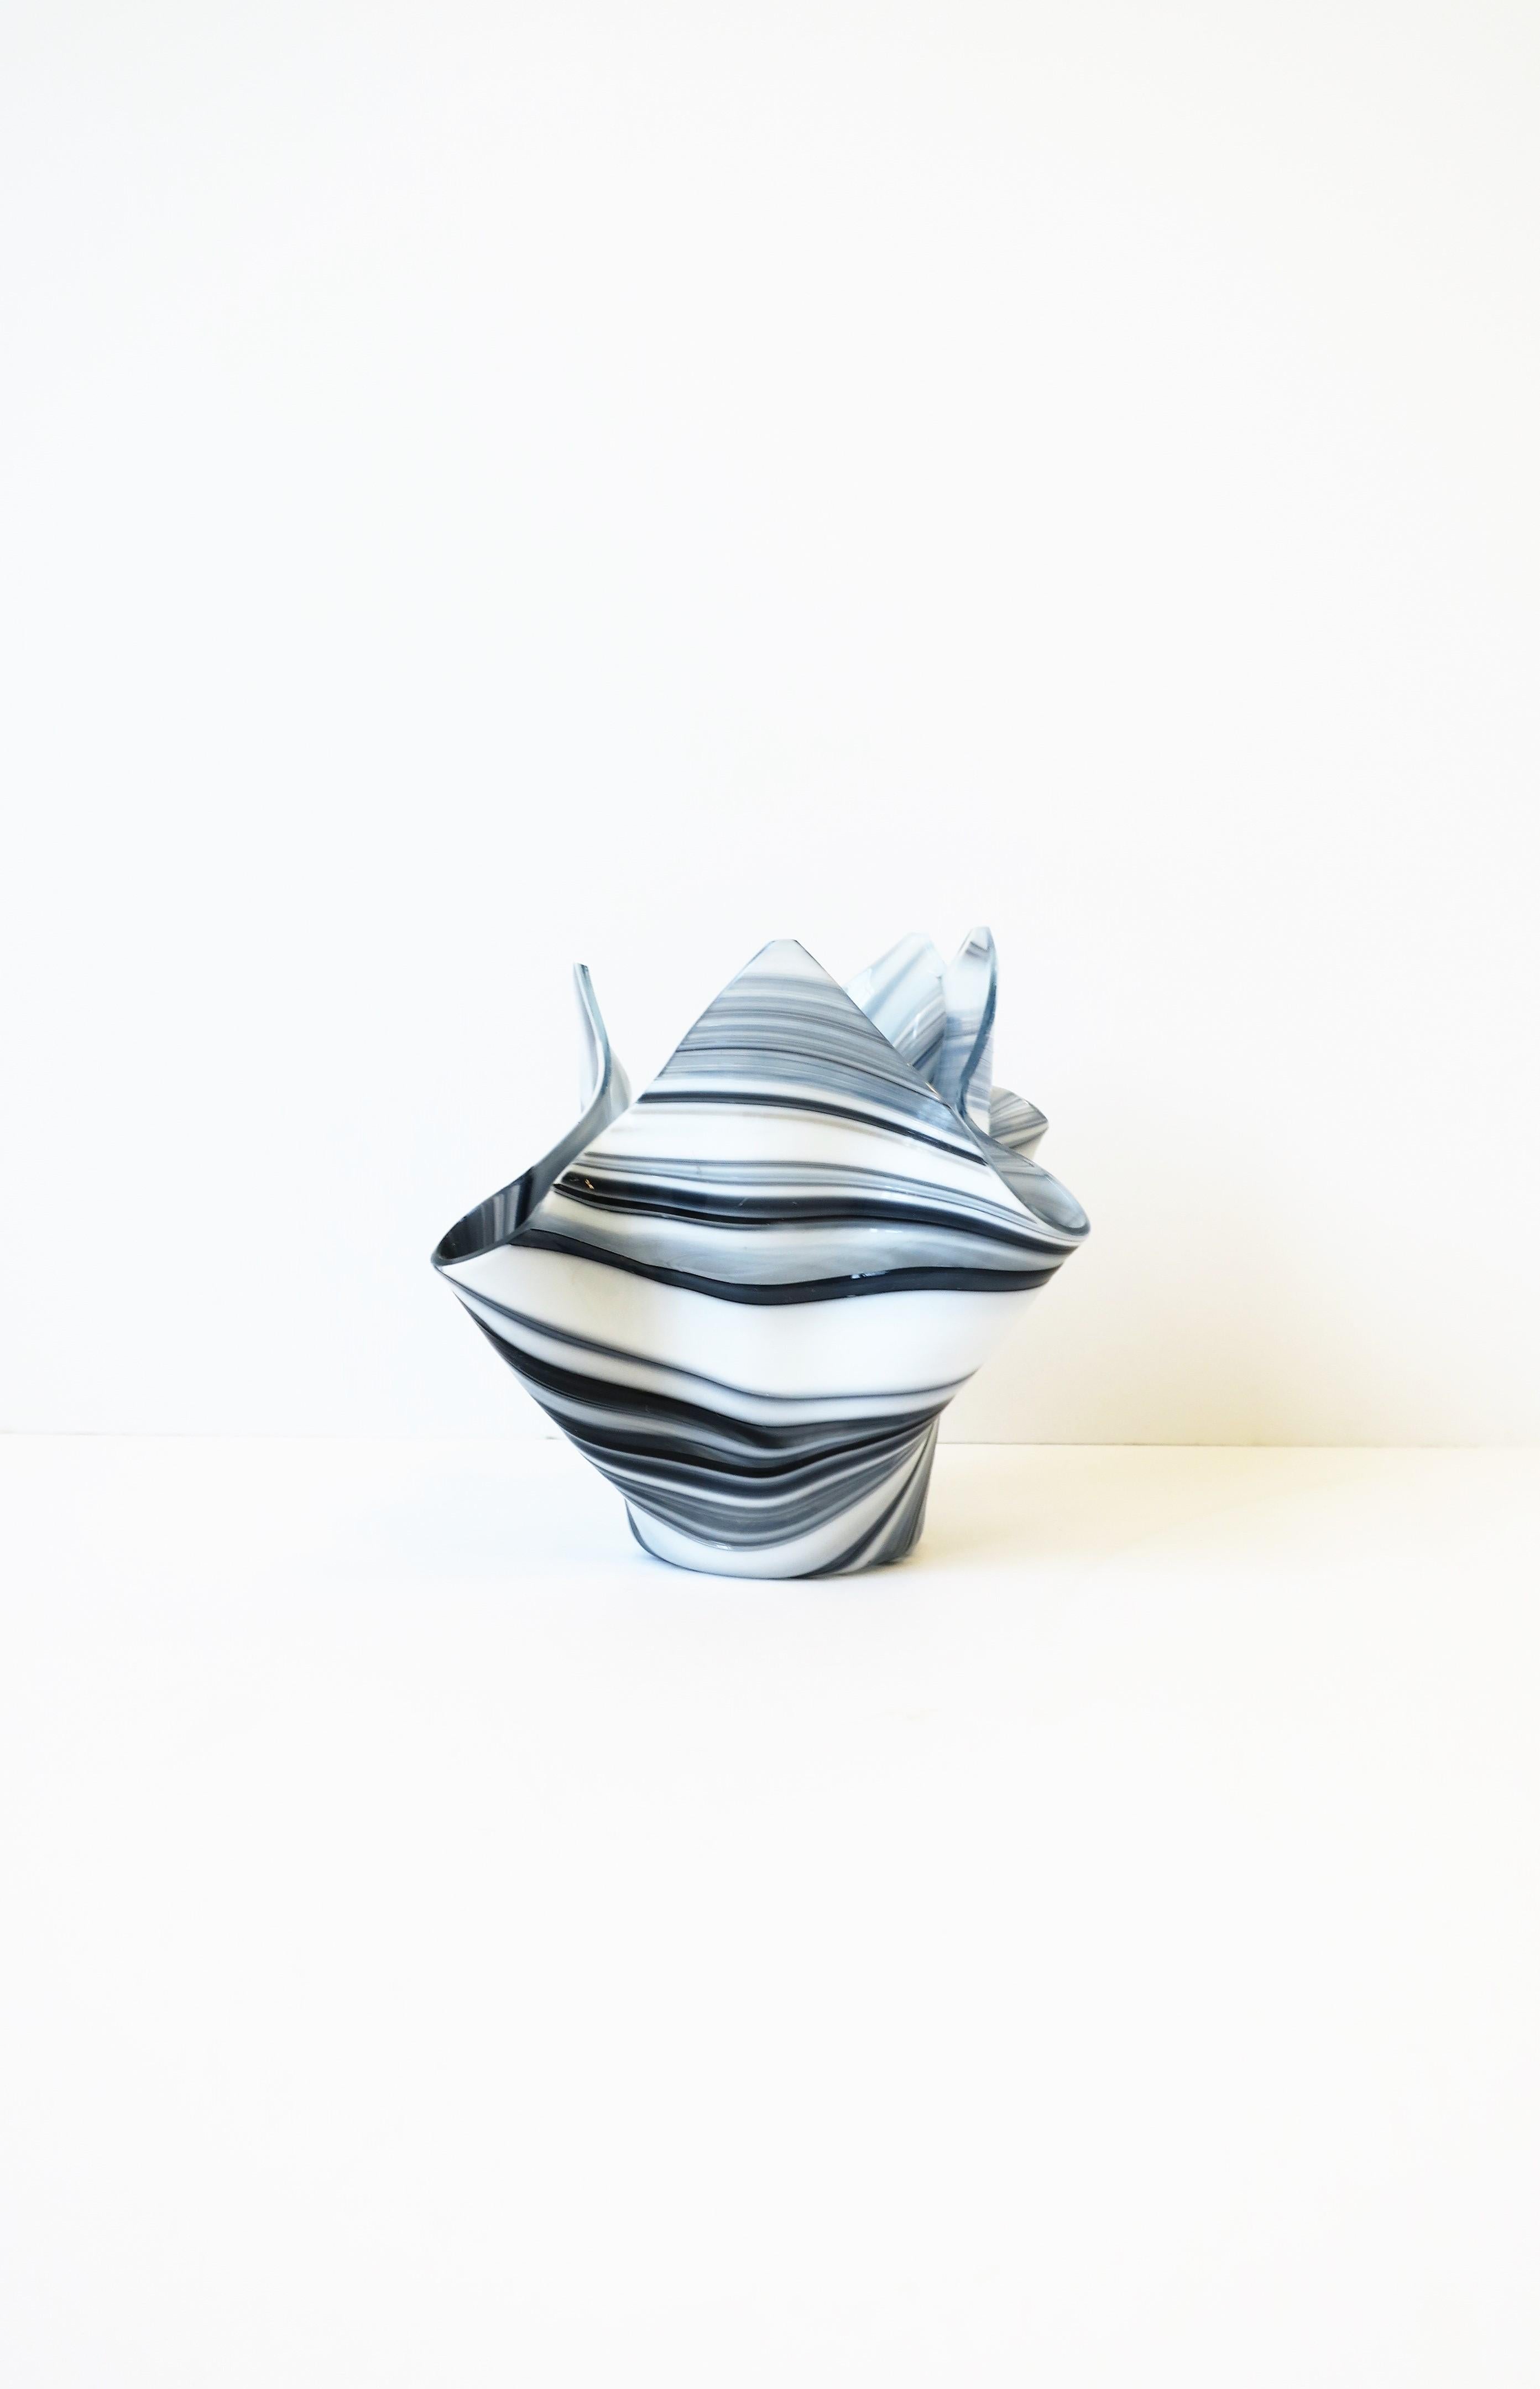 Handkerchief Black and White Art Glass Vase in the Venini Style For Sale 5